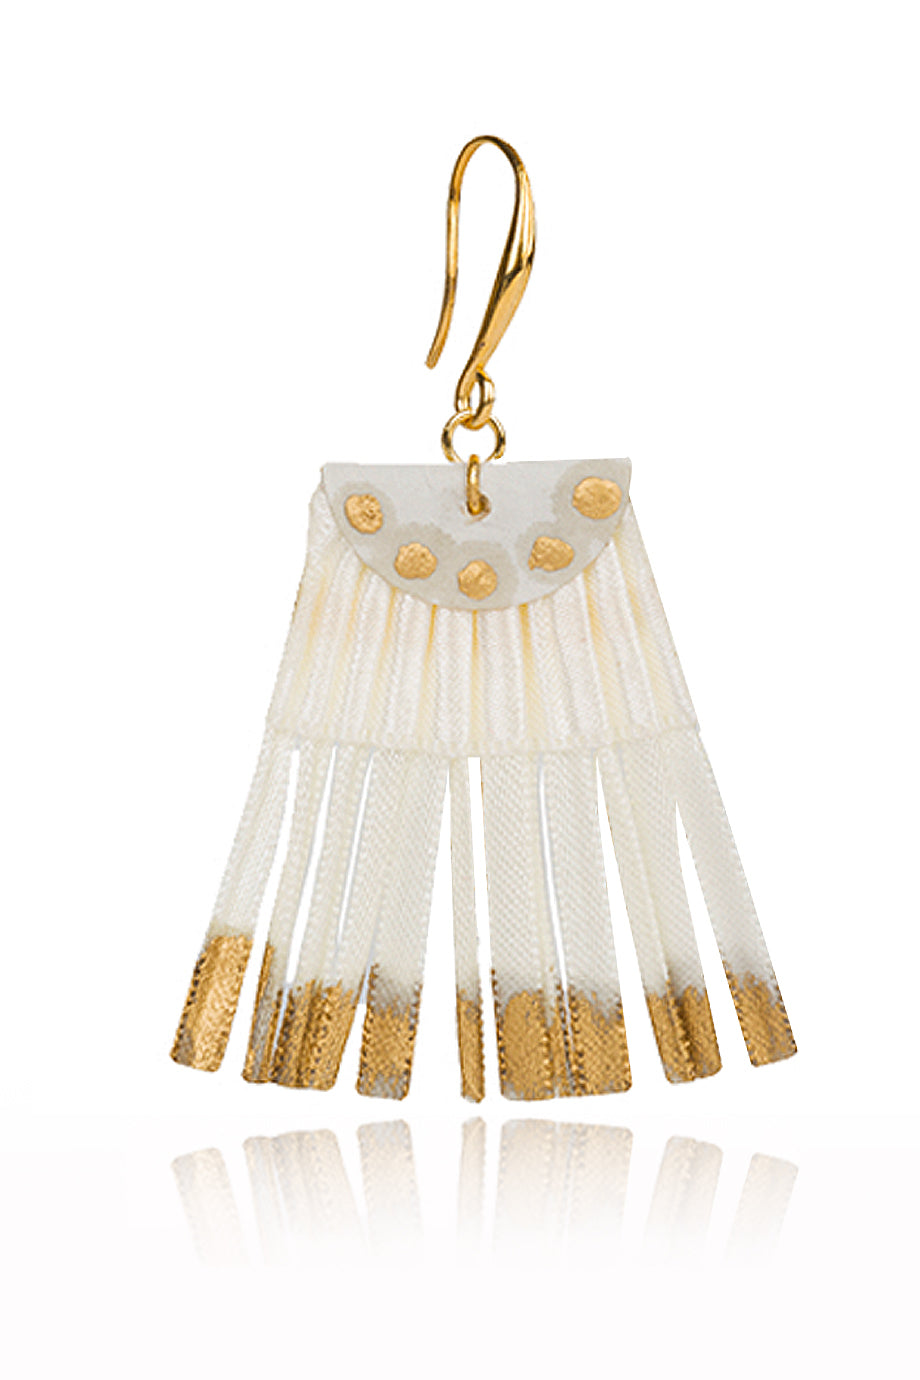 Scallop Λευκά Υφασμάτινα Σκουλαρίκια με Χρυσό | Κοσμήματα - Σκουλαρίκια - Αλεξάνδρα Τσουκαλά